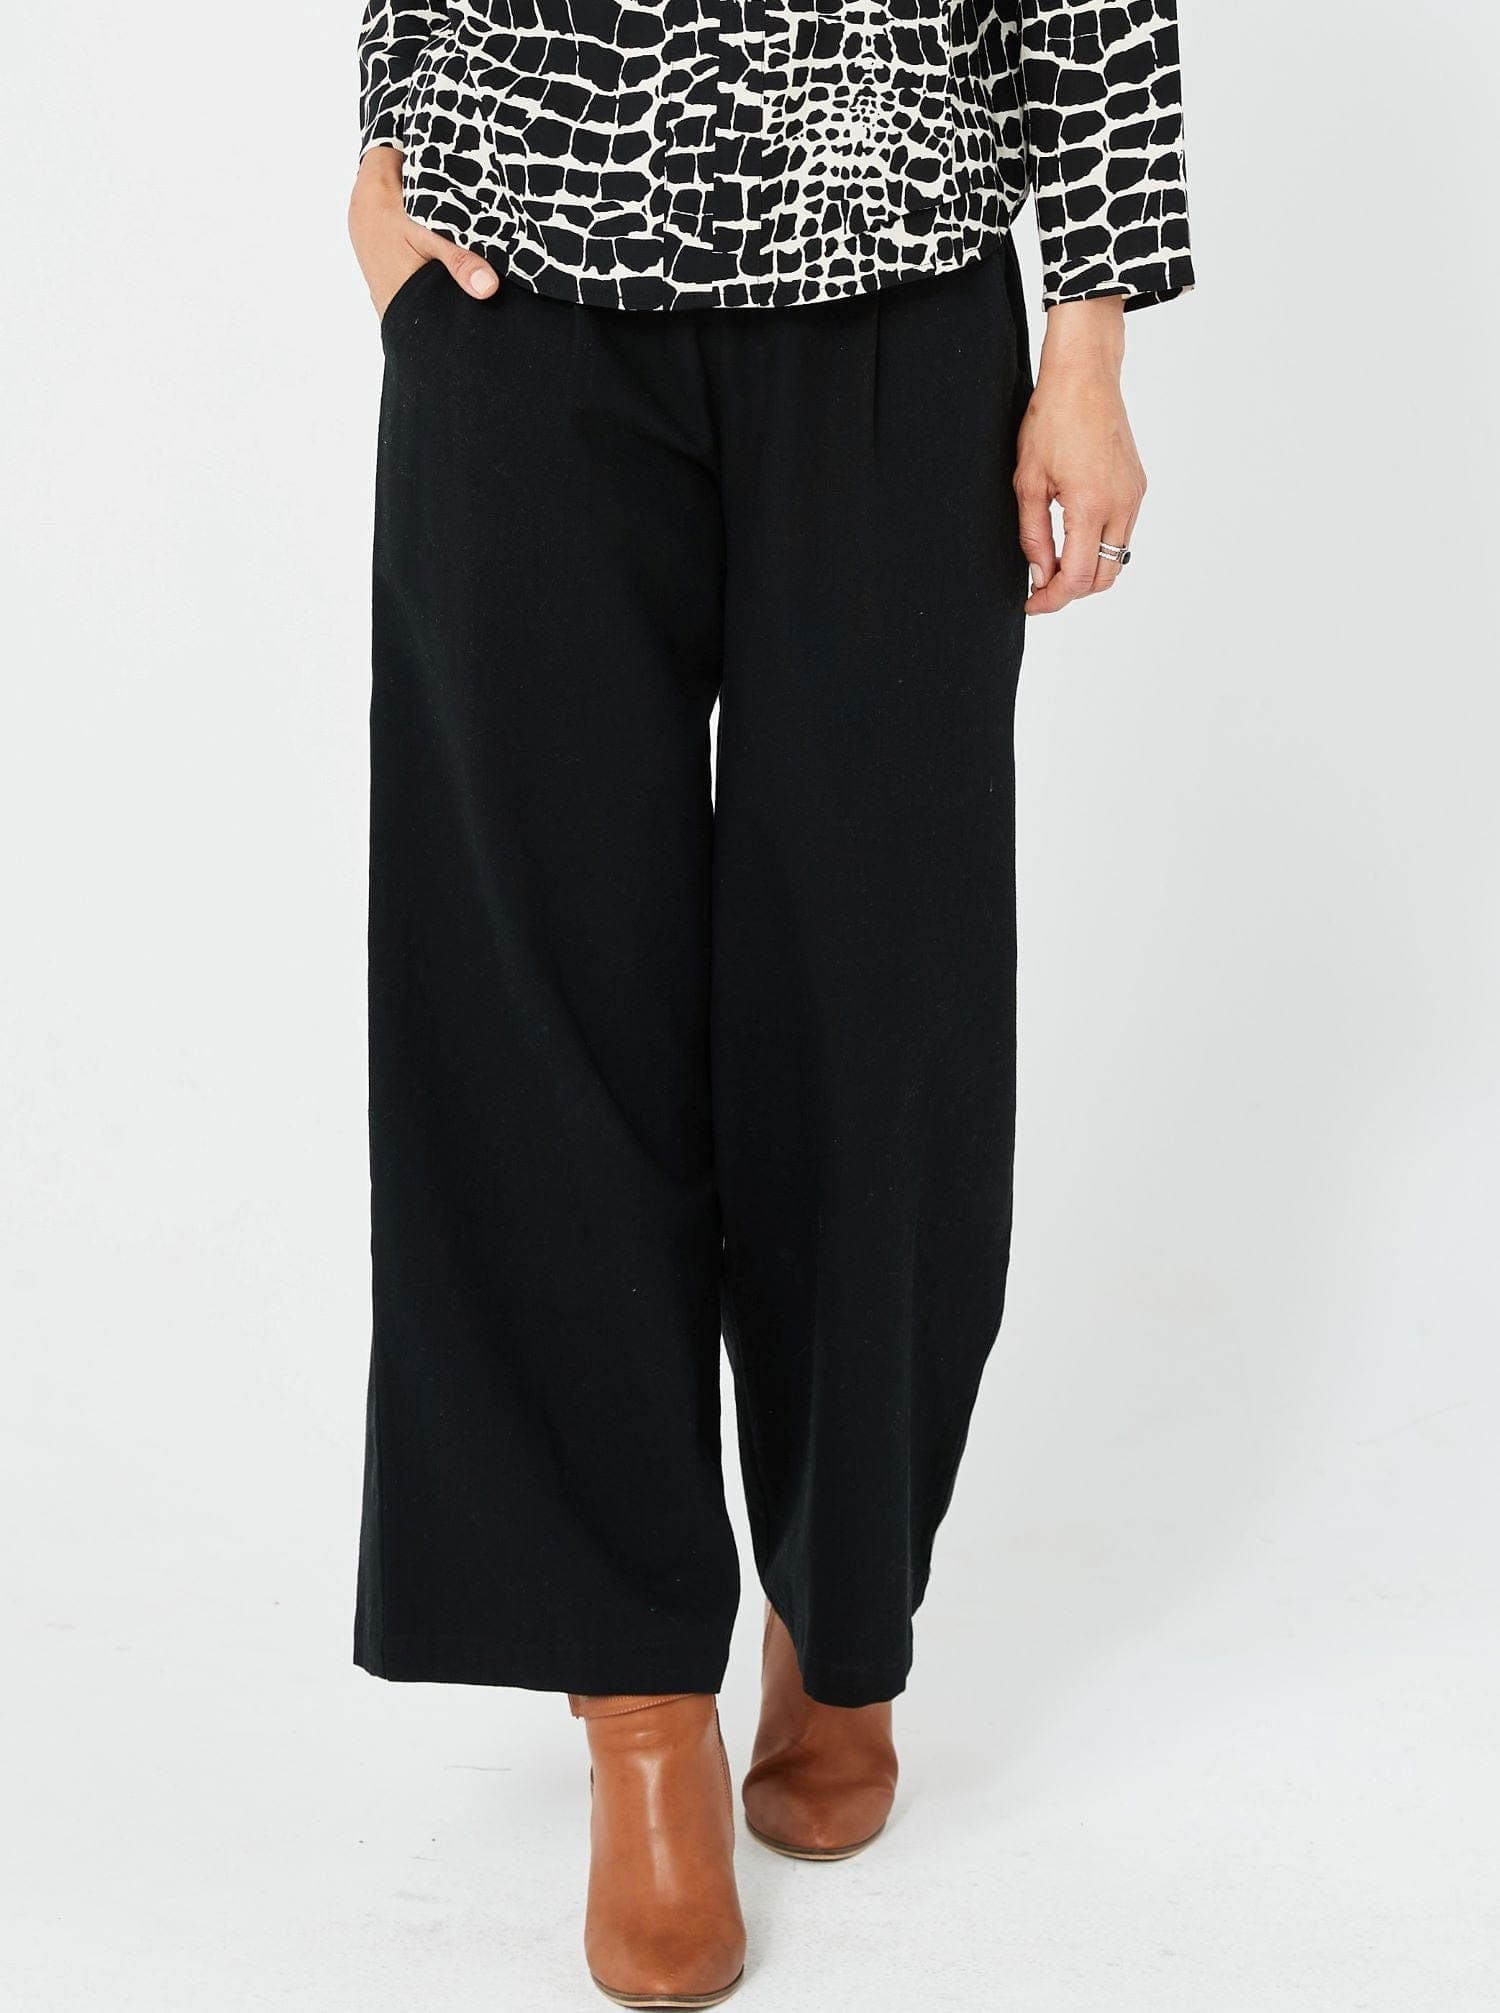 KAJA Clothing Cotton Black Wide Leg Casual Pants for Women